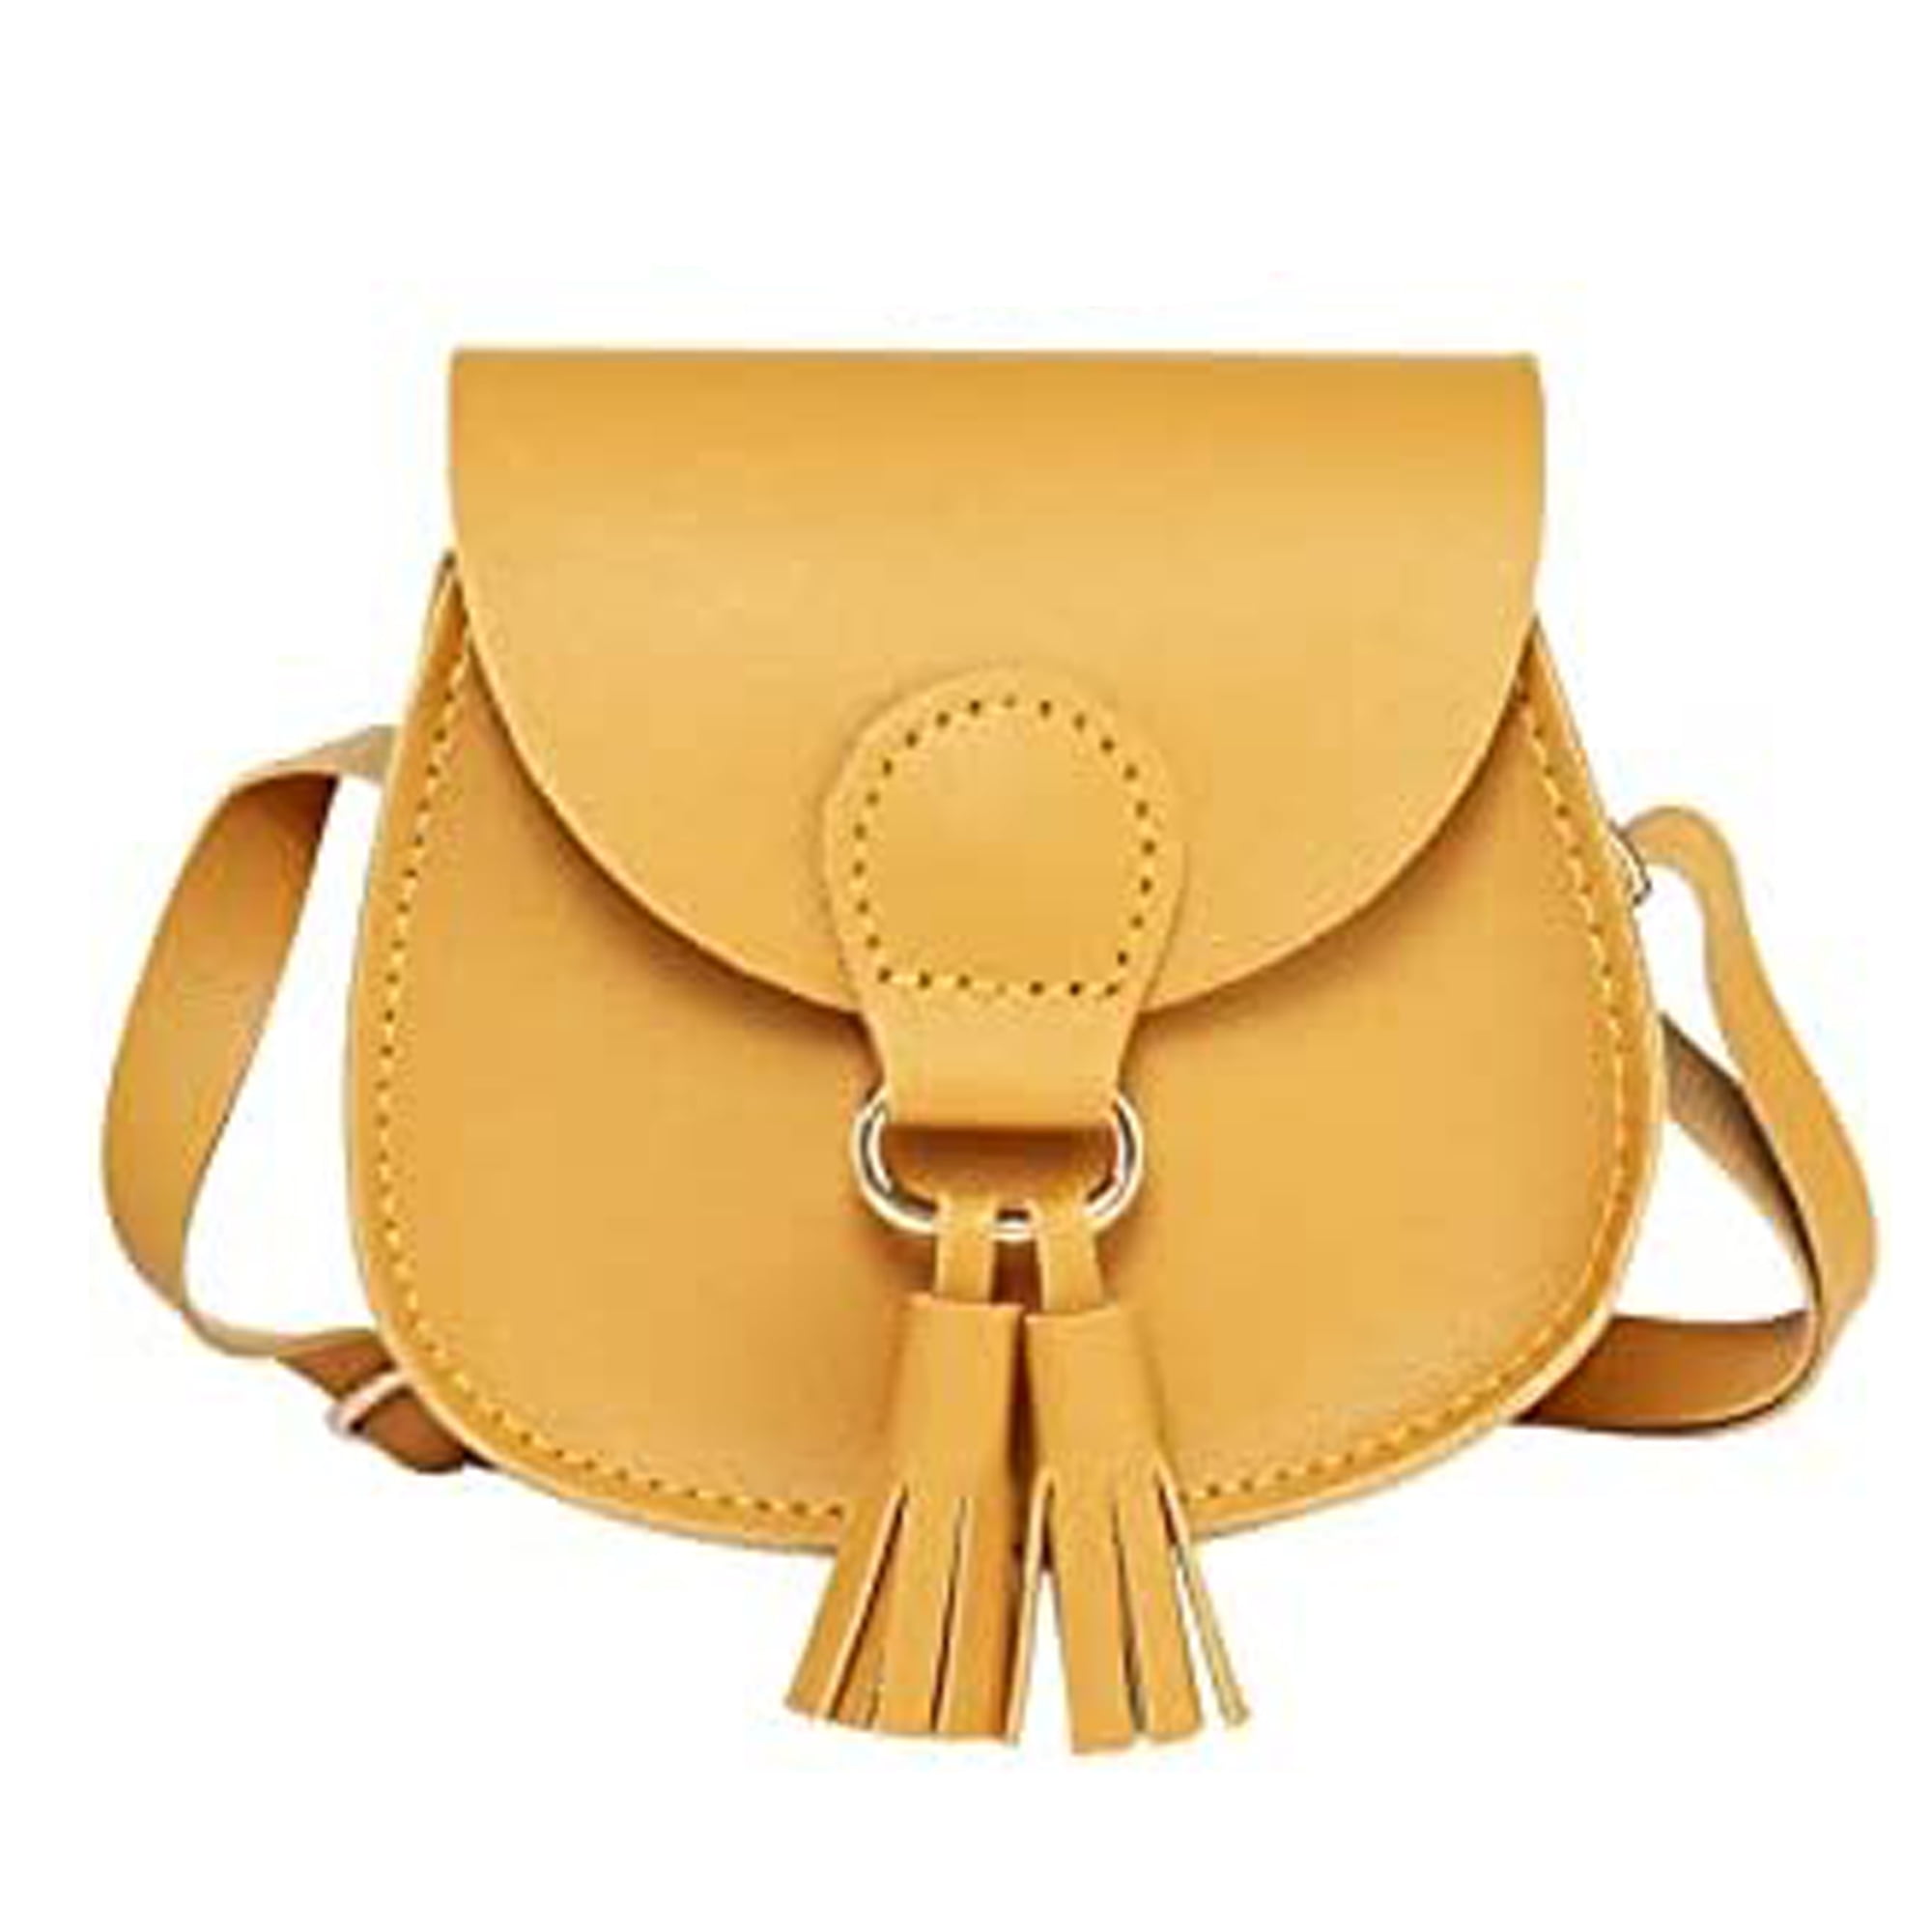 Nuovedive Italian Purse Mustard Yellow Leather Shoulder Handbag | eBay